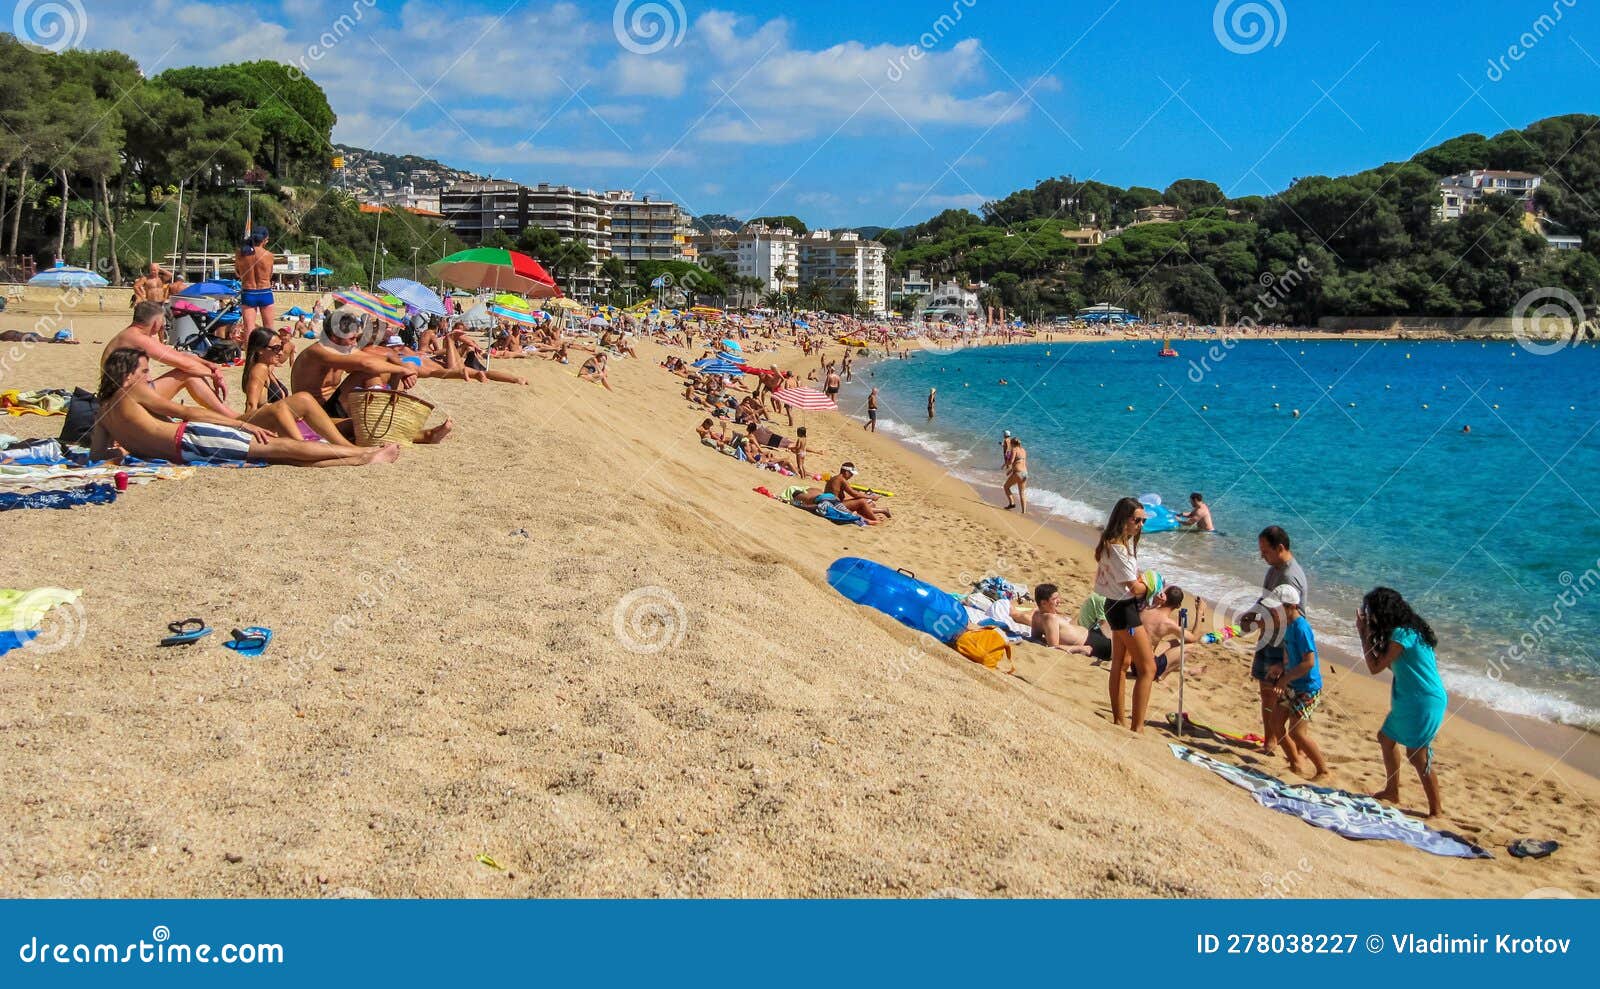 Fenals Beach In Lloret De Mar Spain Editorial Photography Image Of